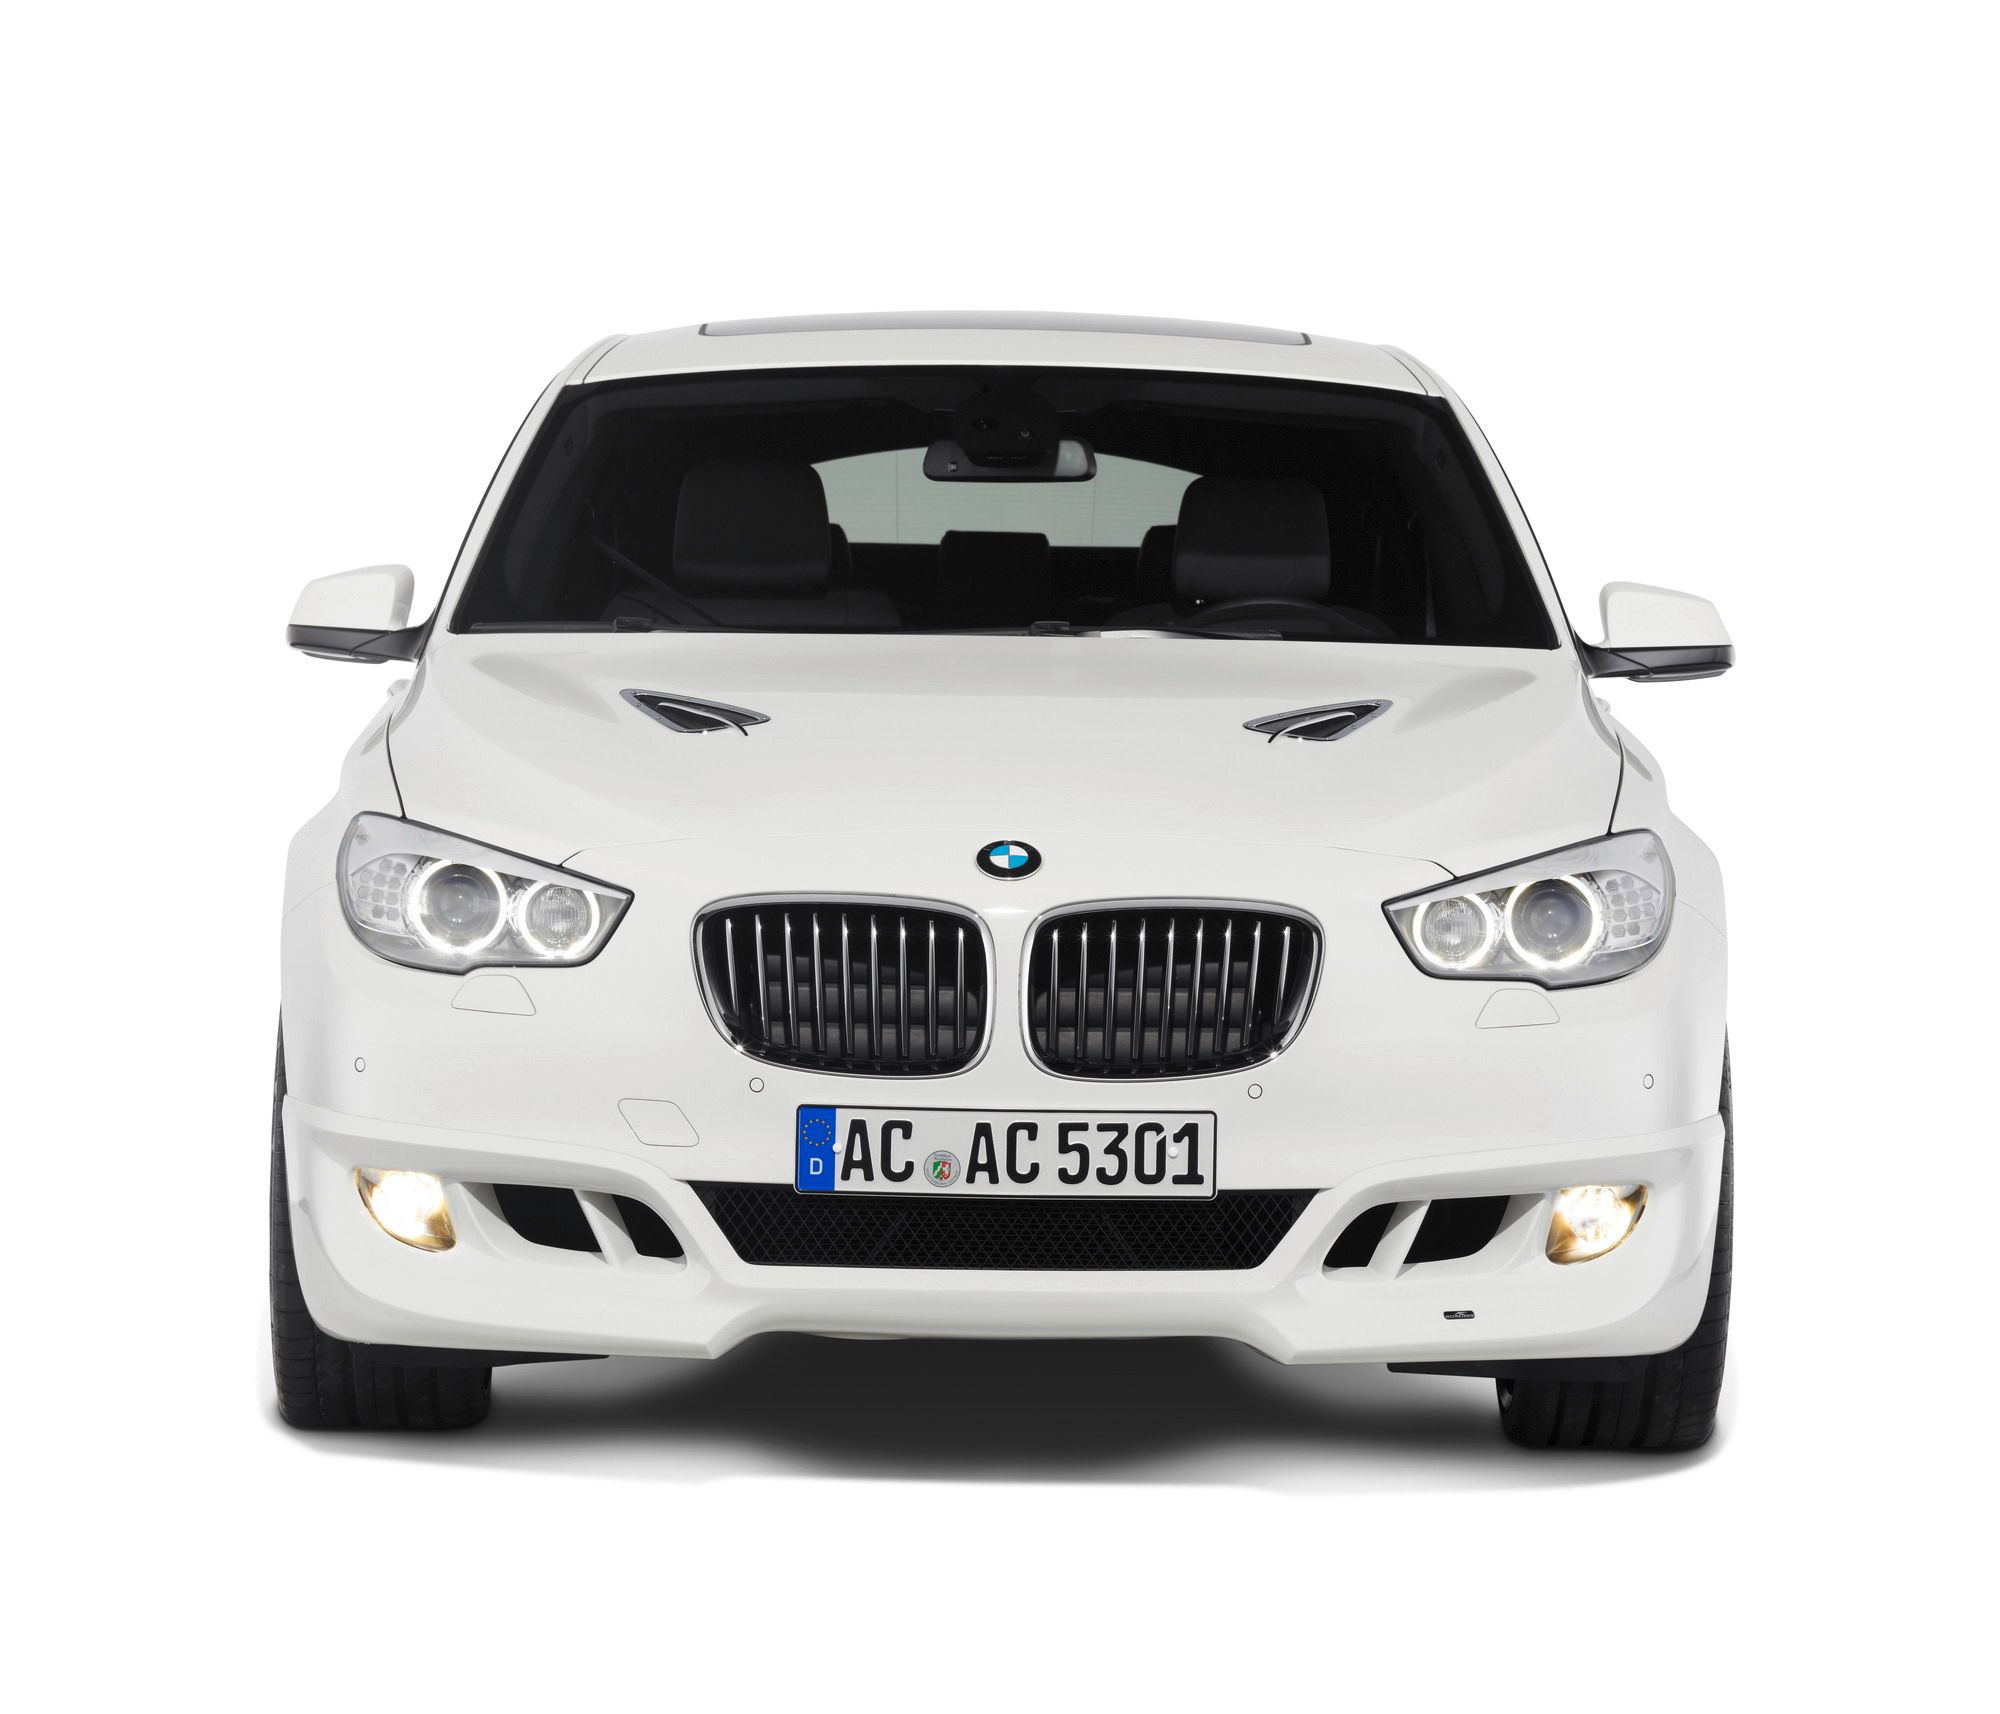 2010 - 2010 BMW 5-Series GT by AC Schnitzer